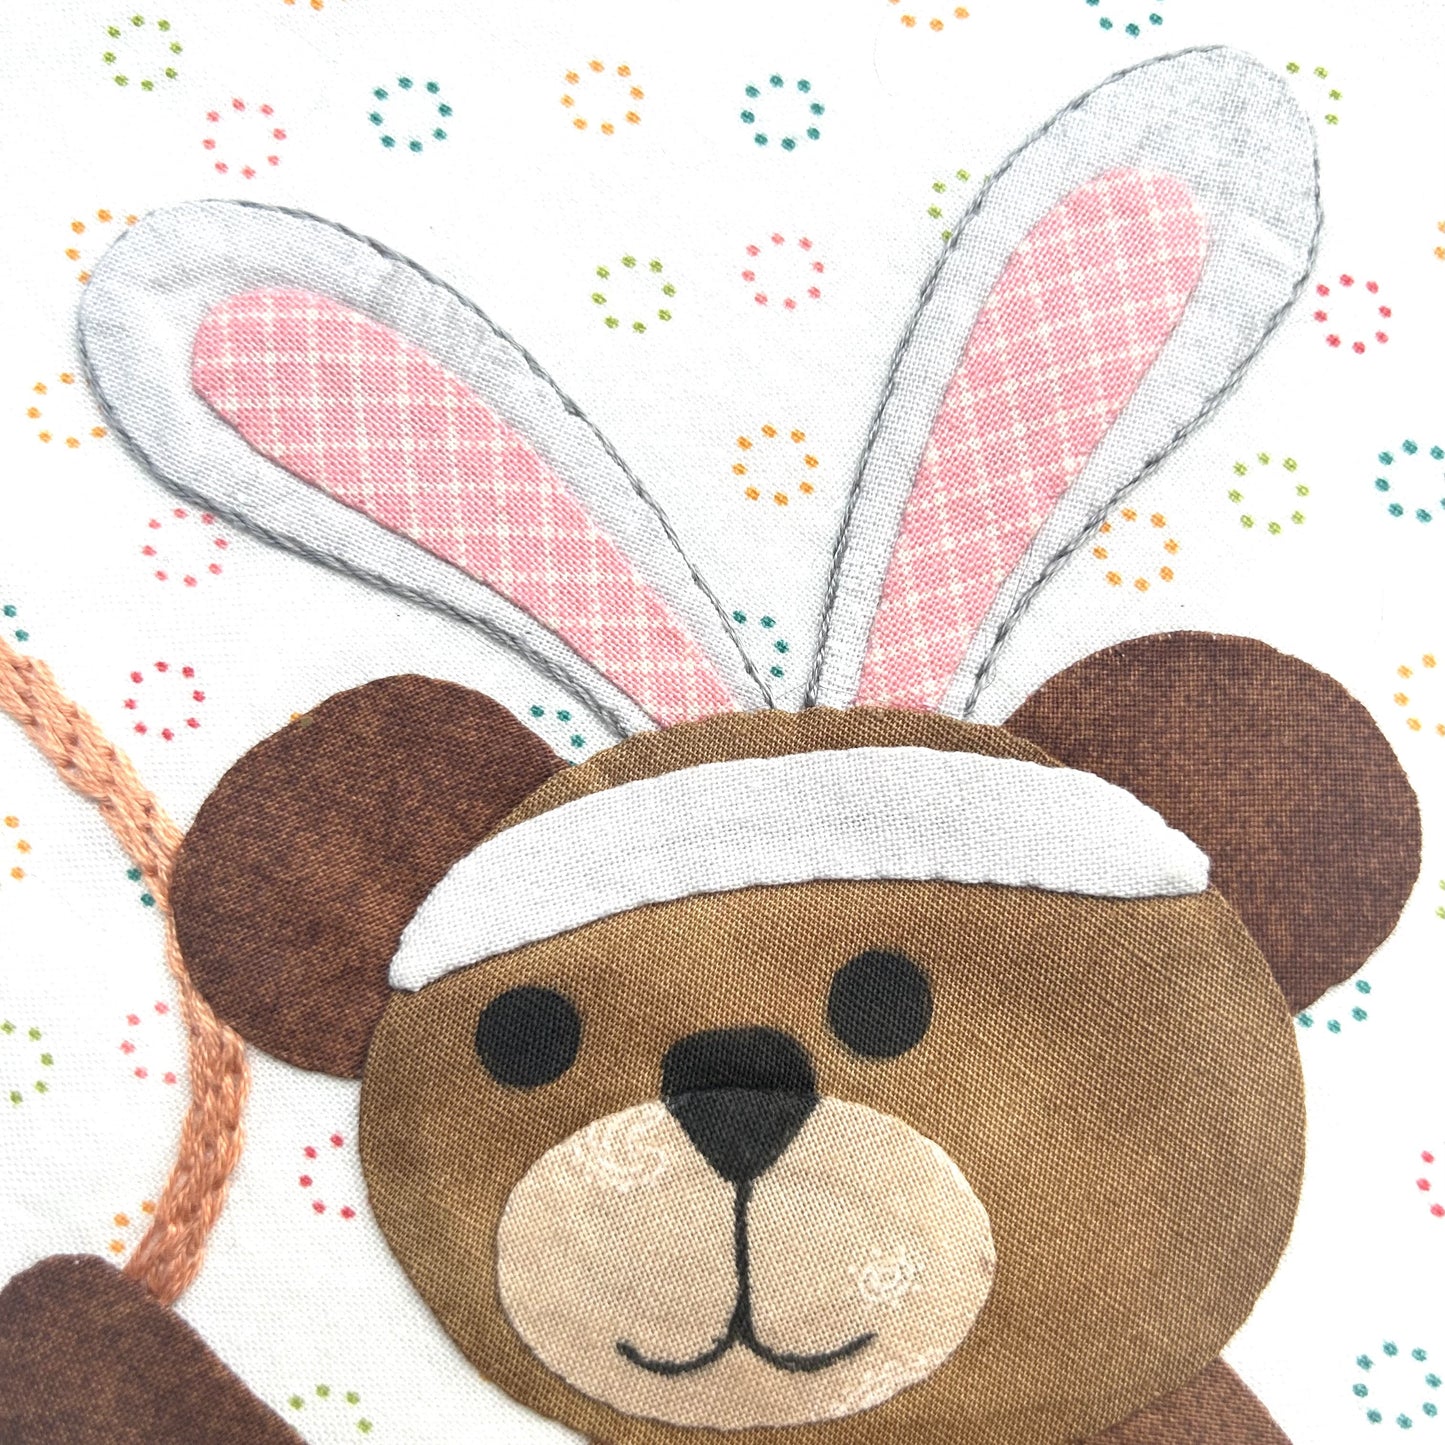 Year of Bears - Bunny Bear Appliqué Pattern PDF Download